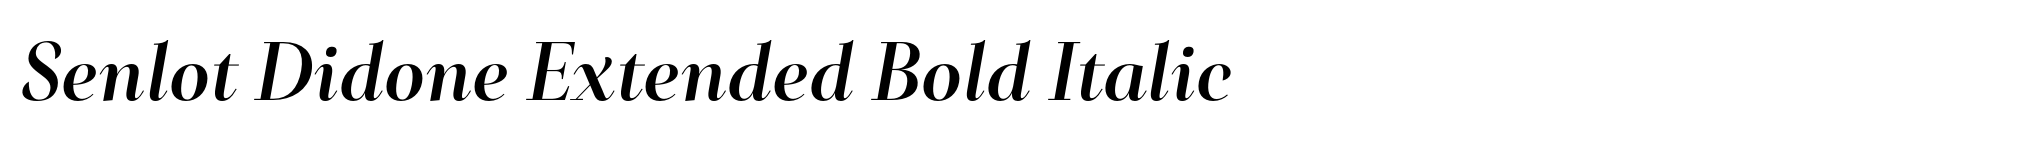 Senlot Didone Extended Bold Italic image